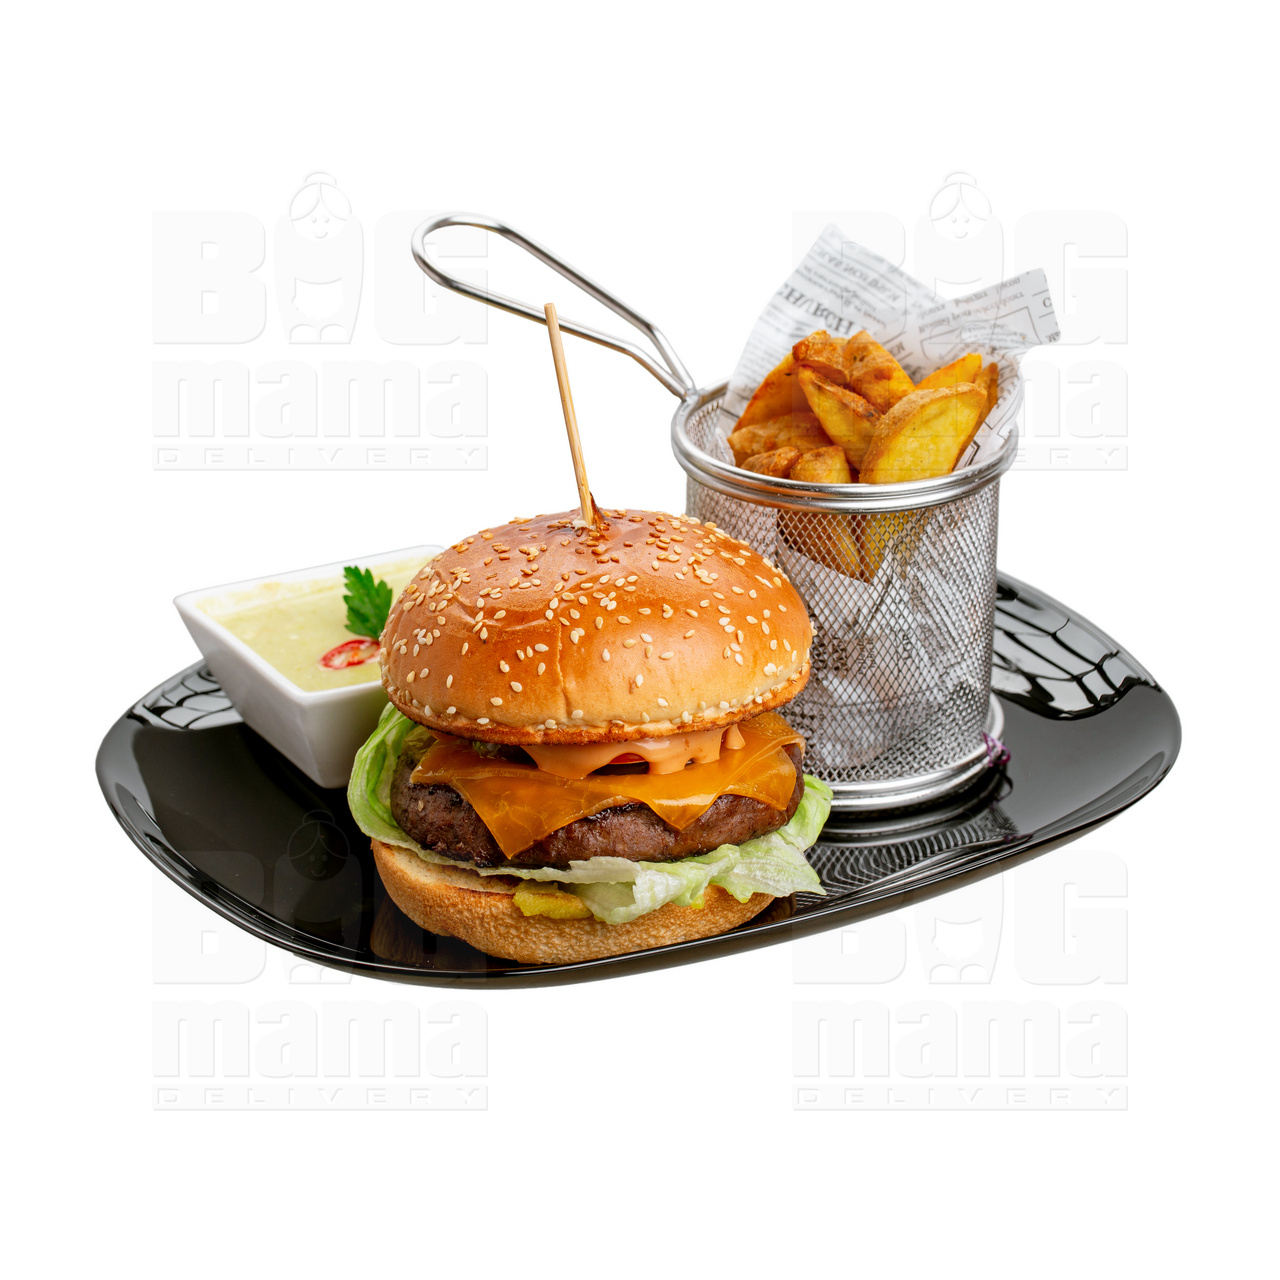 Product #255 image - Jalapeno hamburger menu